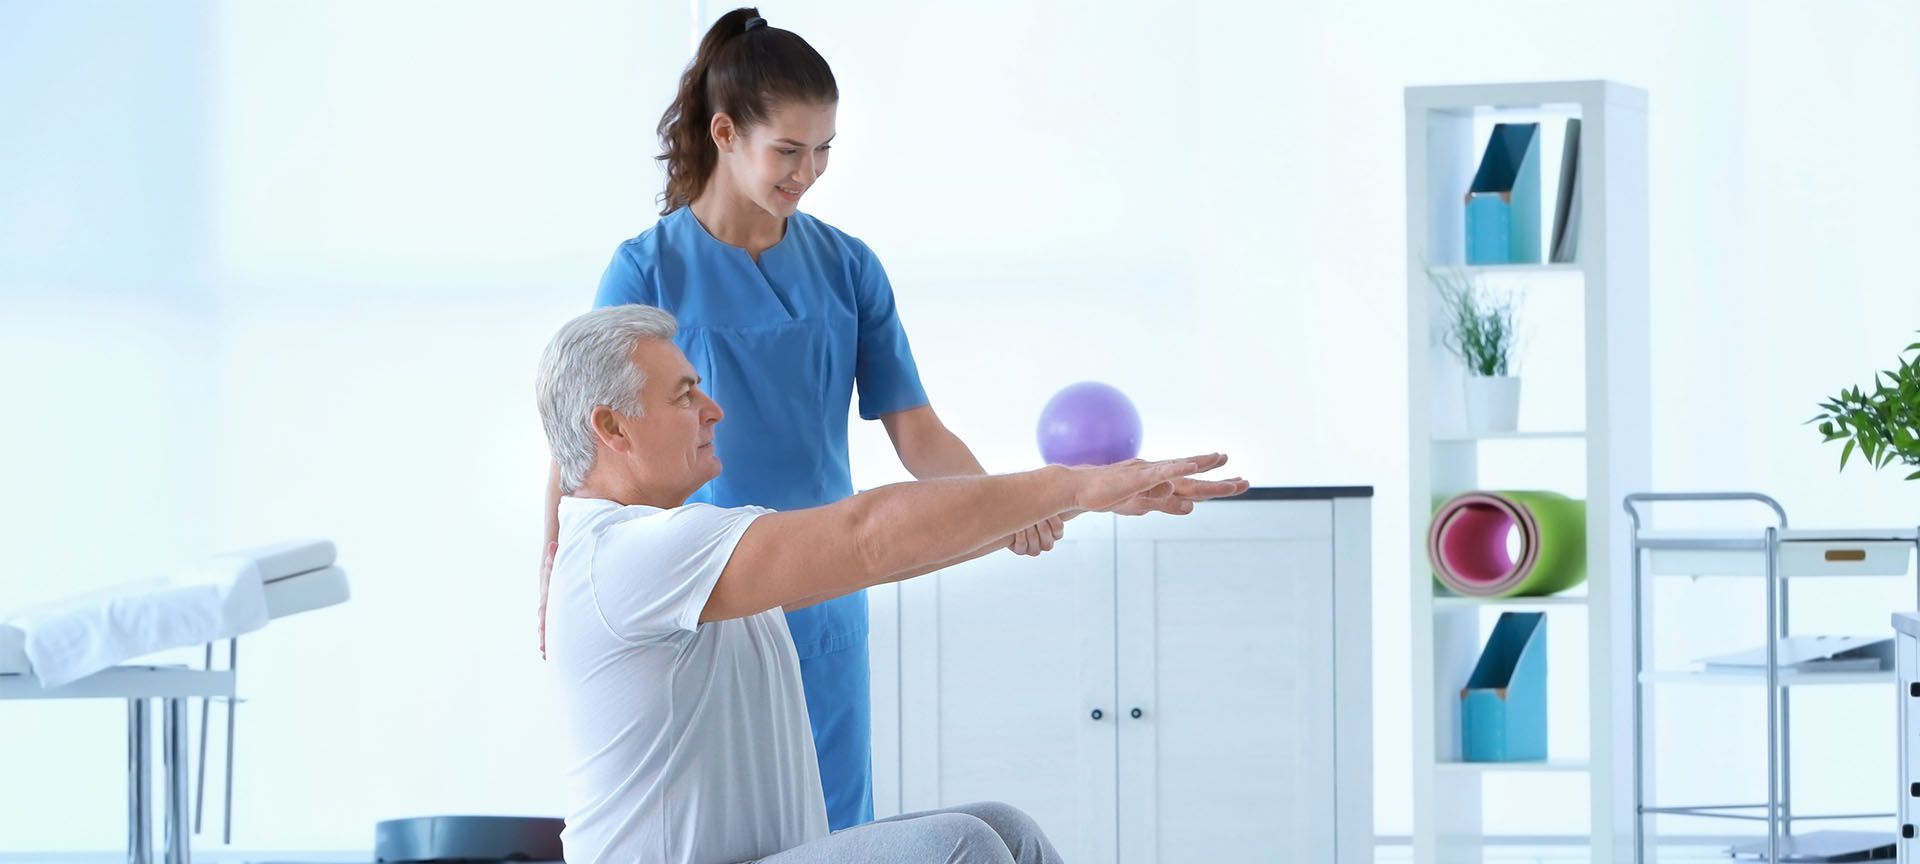 physiotherapy as rehabilitation